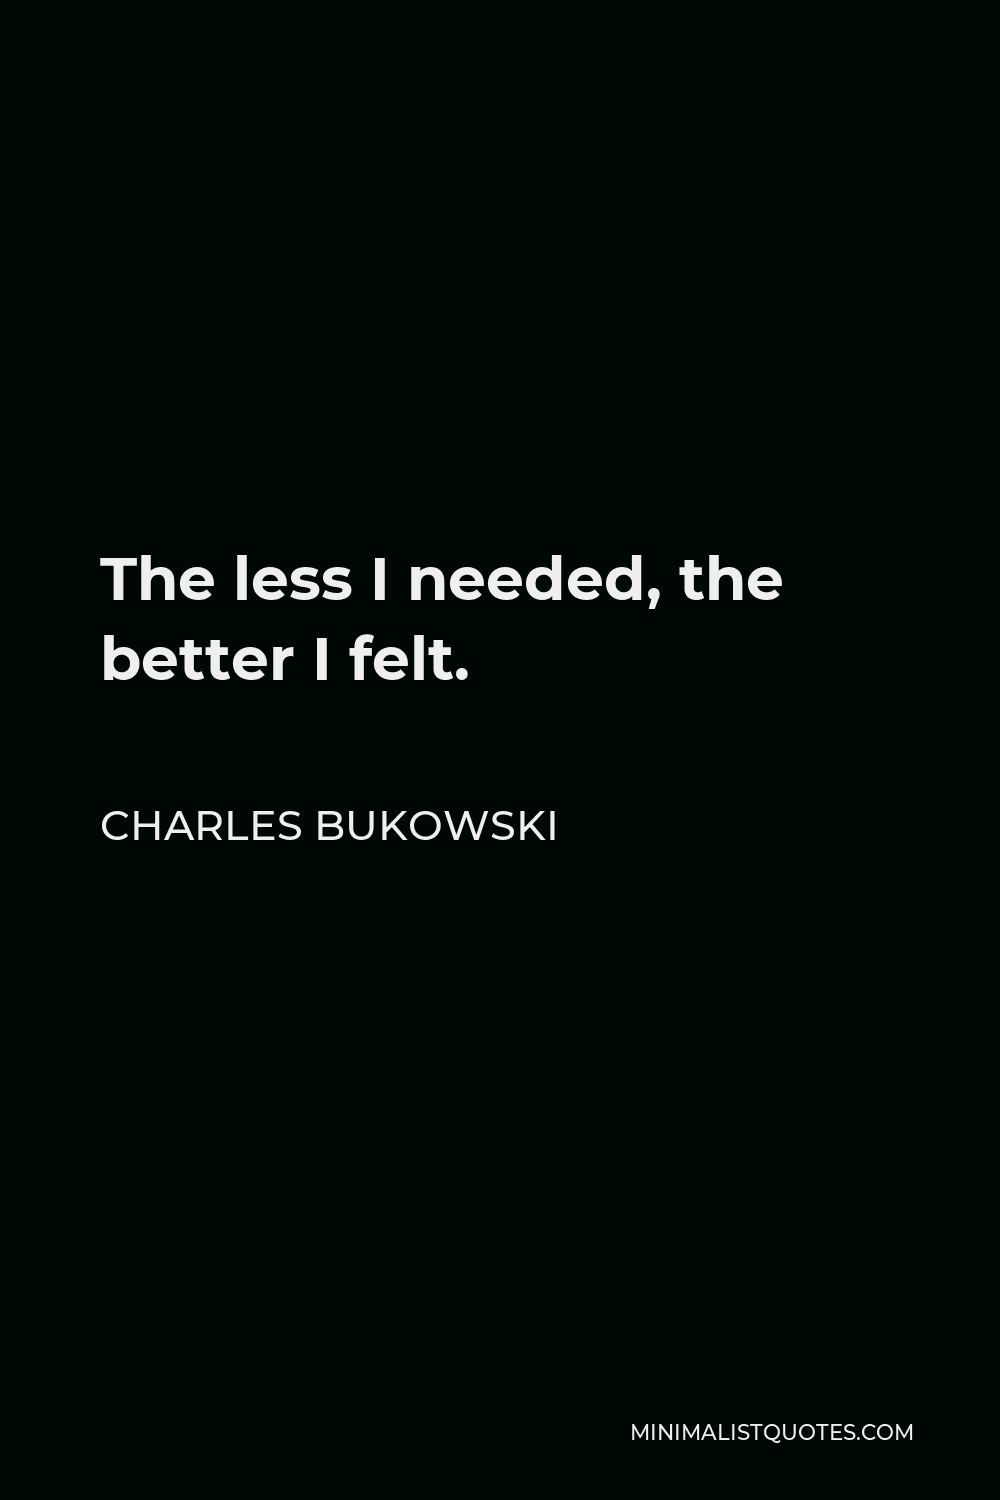 Charles Bukowski Quote - The less I needed, the better I felt.